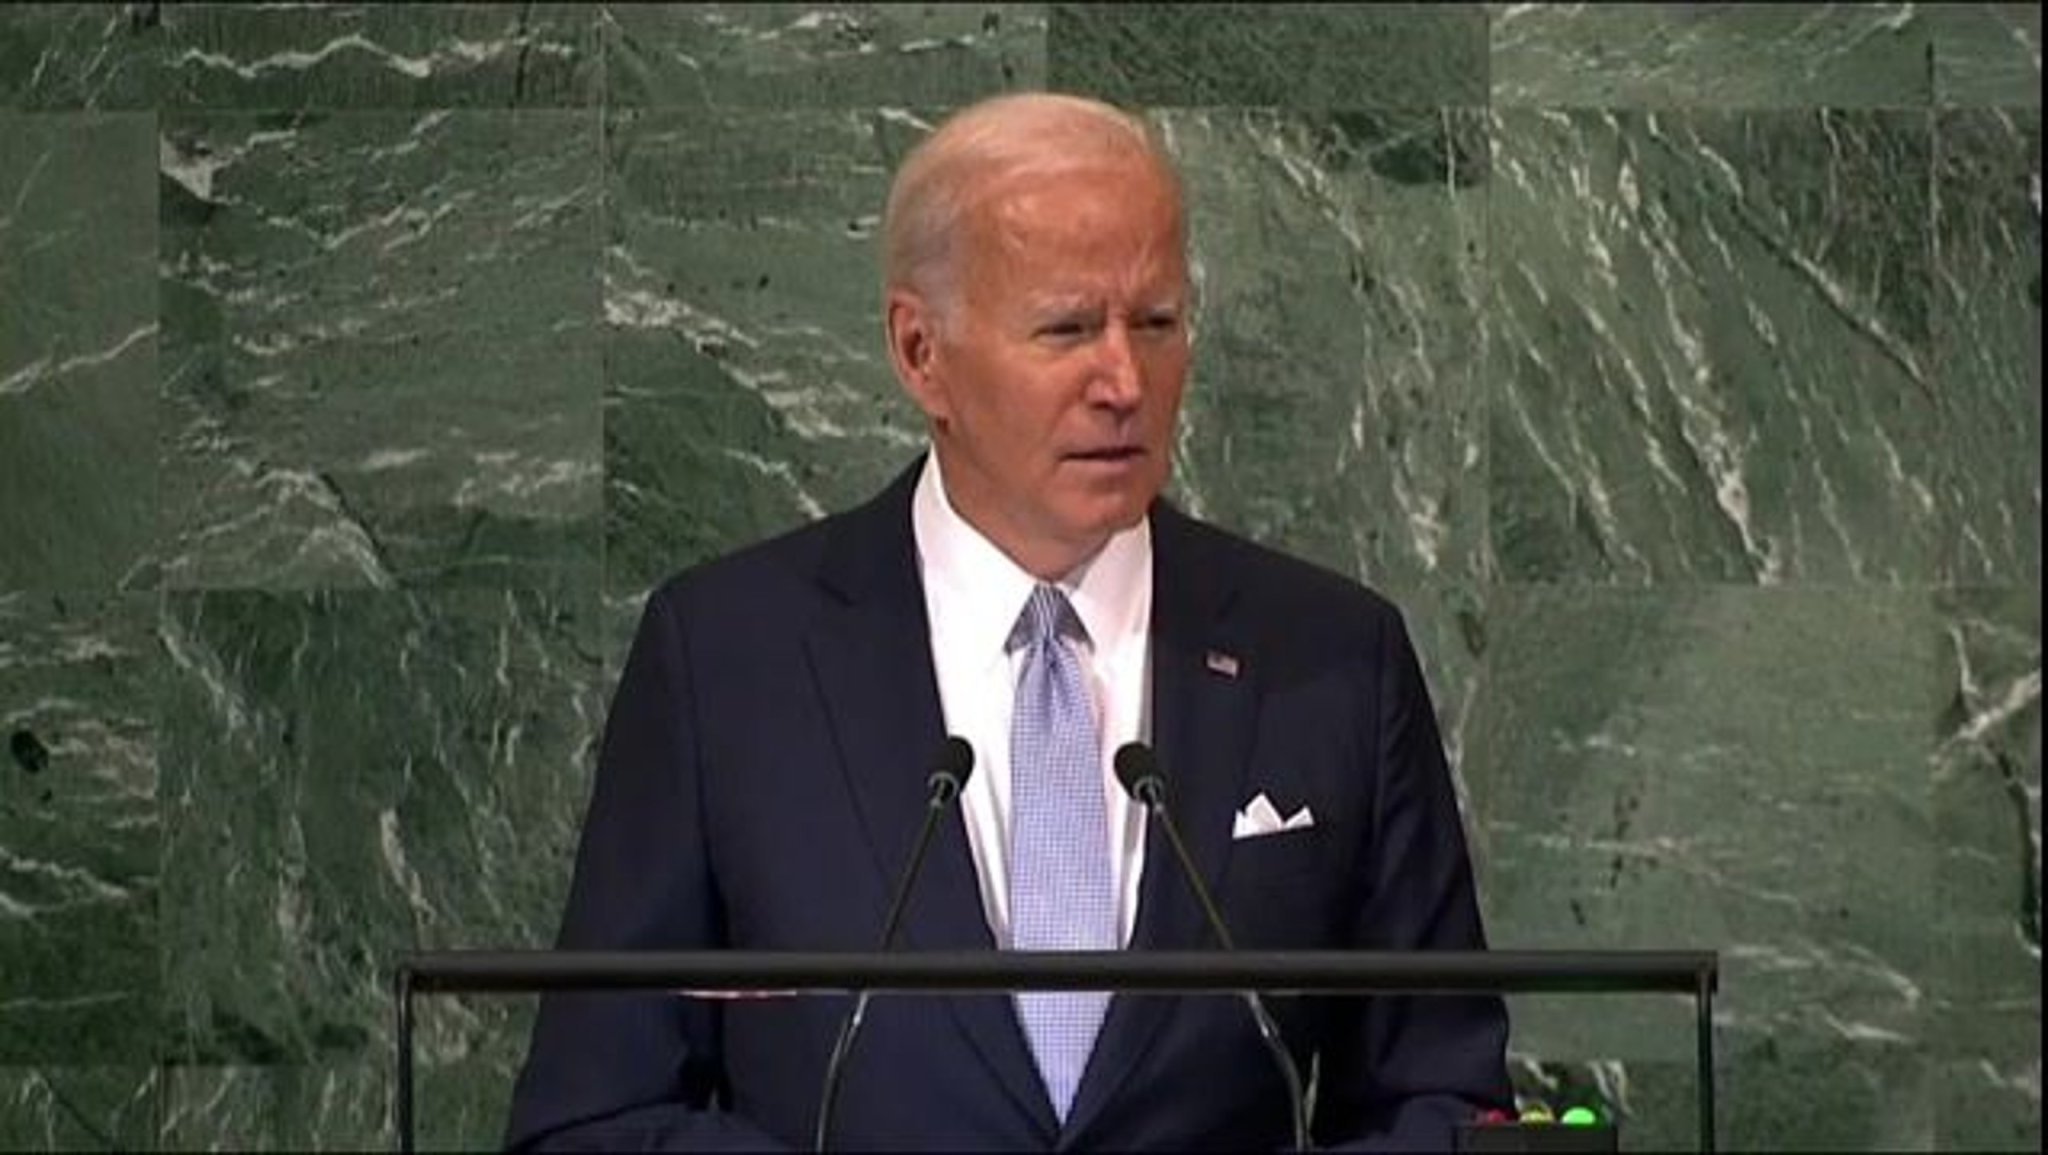 Biden Calls Out Putin, Russia at UN General Assembly